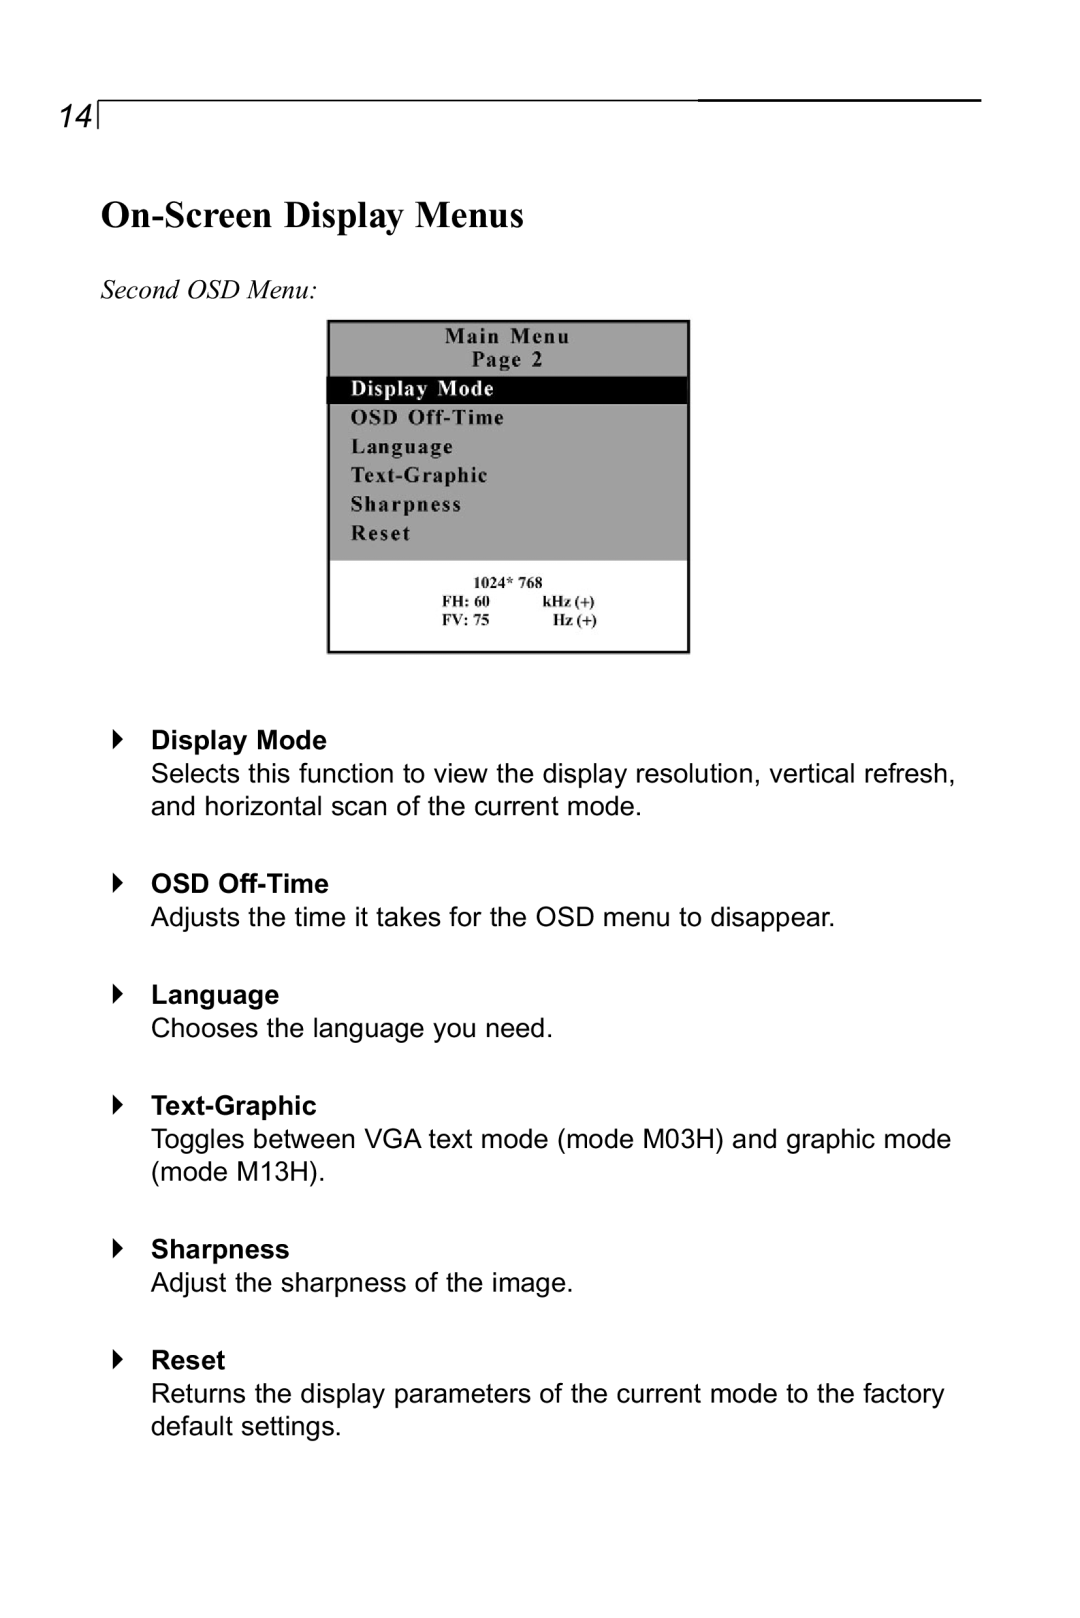 Planar LA1500RTR manual Display Mode, OSD Off-Time, Language, Text-Graphic, Sharpness, Reset, On-Screen Display Menus 